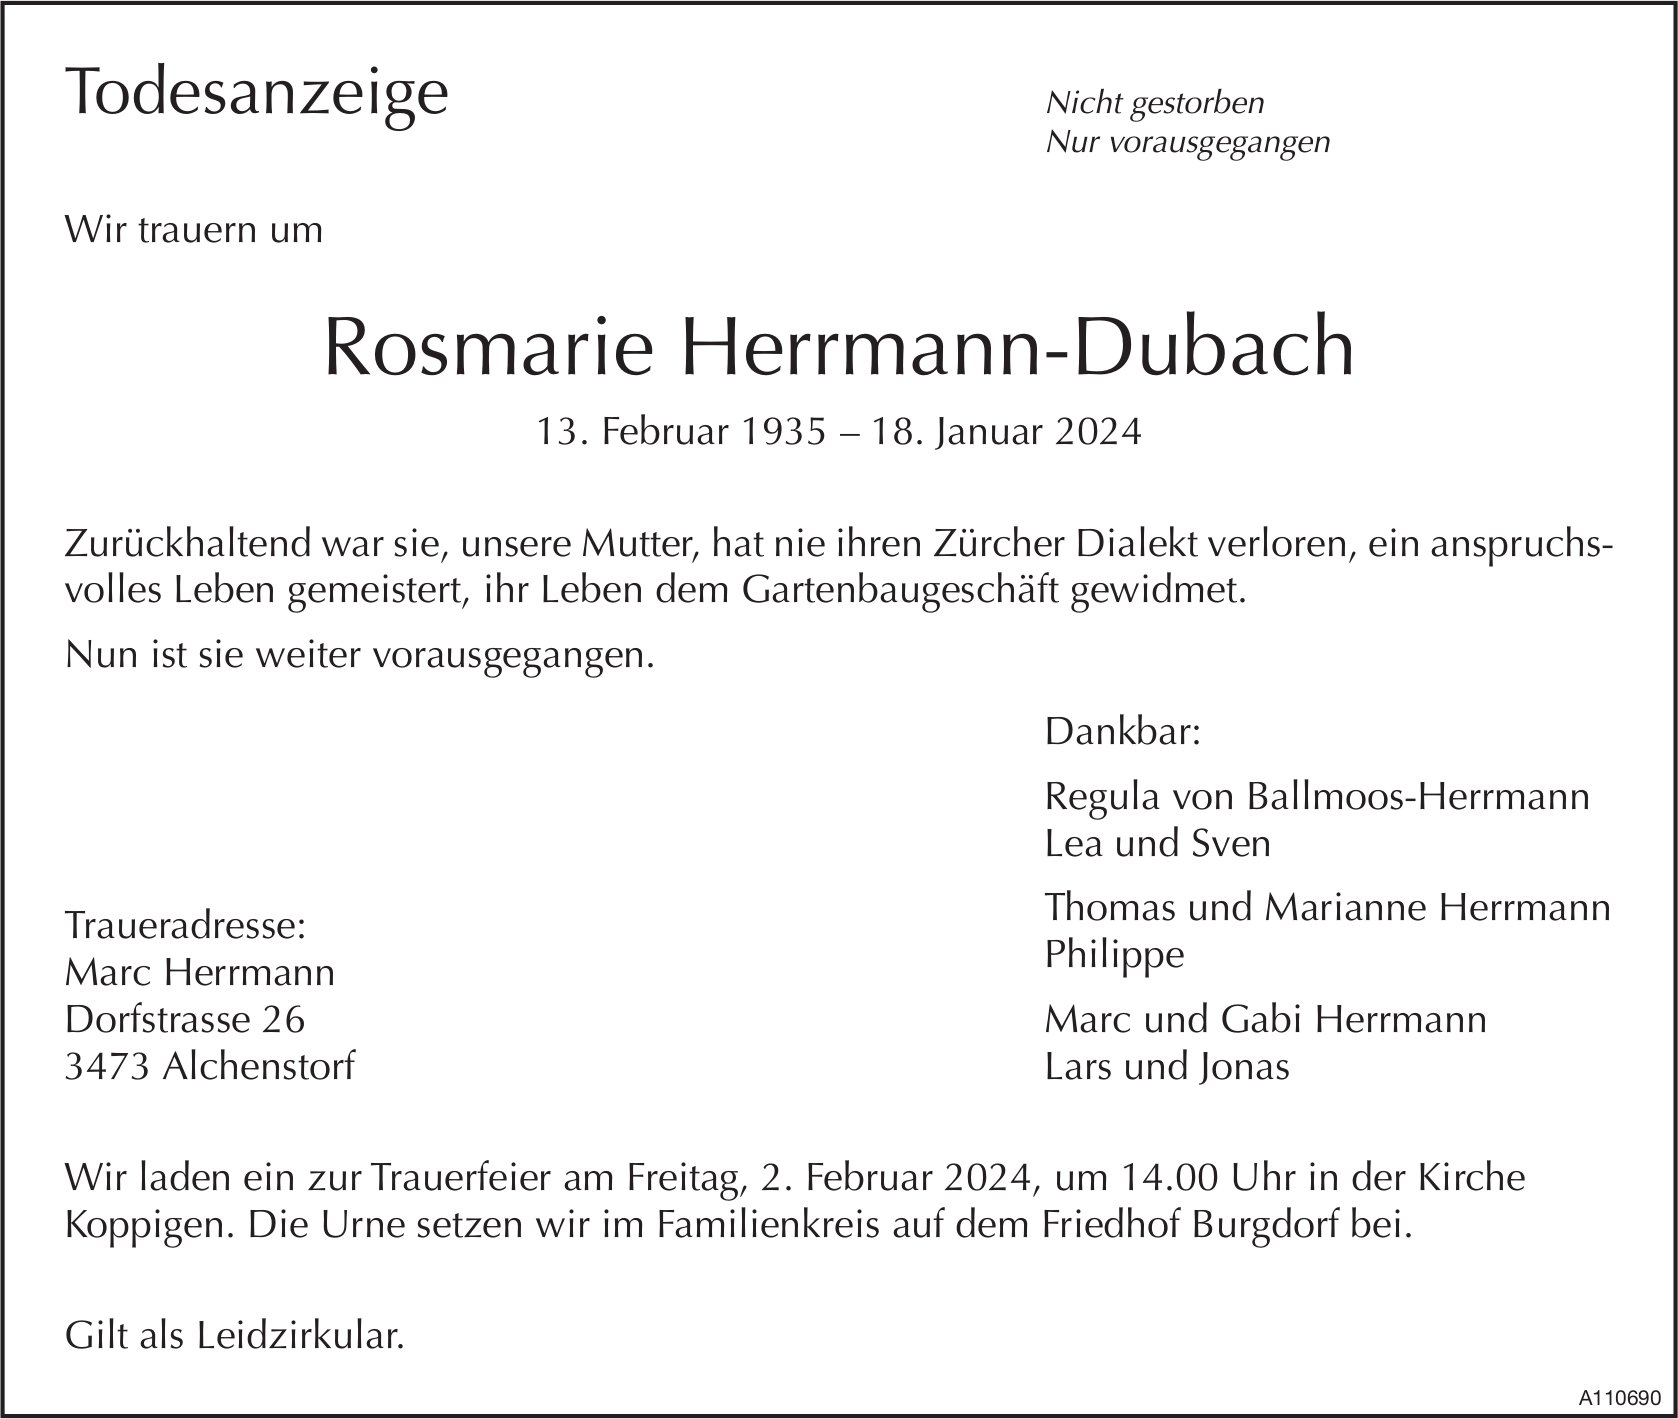 Rosmarie Herrmann-Dubach, Januar 2024 / TA